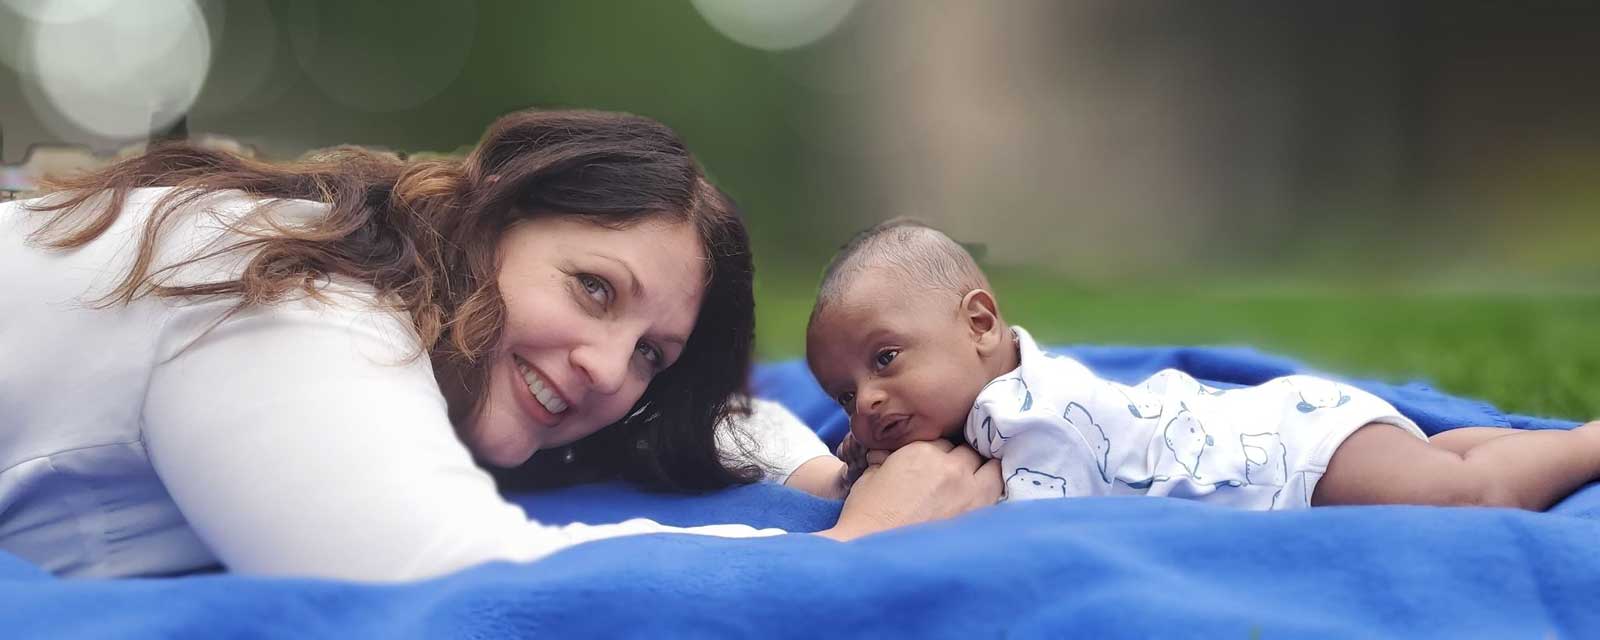 International Occupational Therapist Speaker Dr. Barbra Katerberg with baby in Tesmesgan